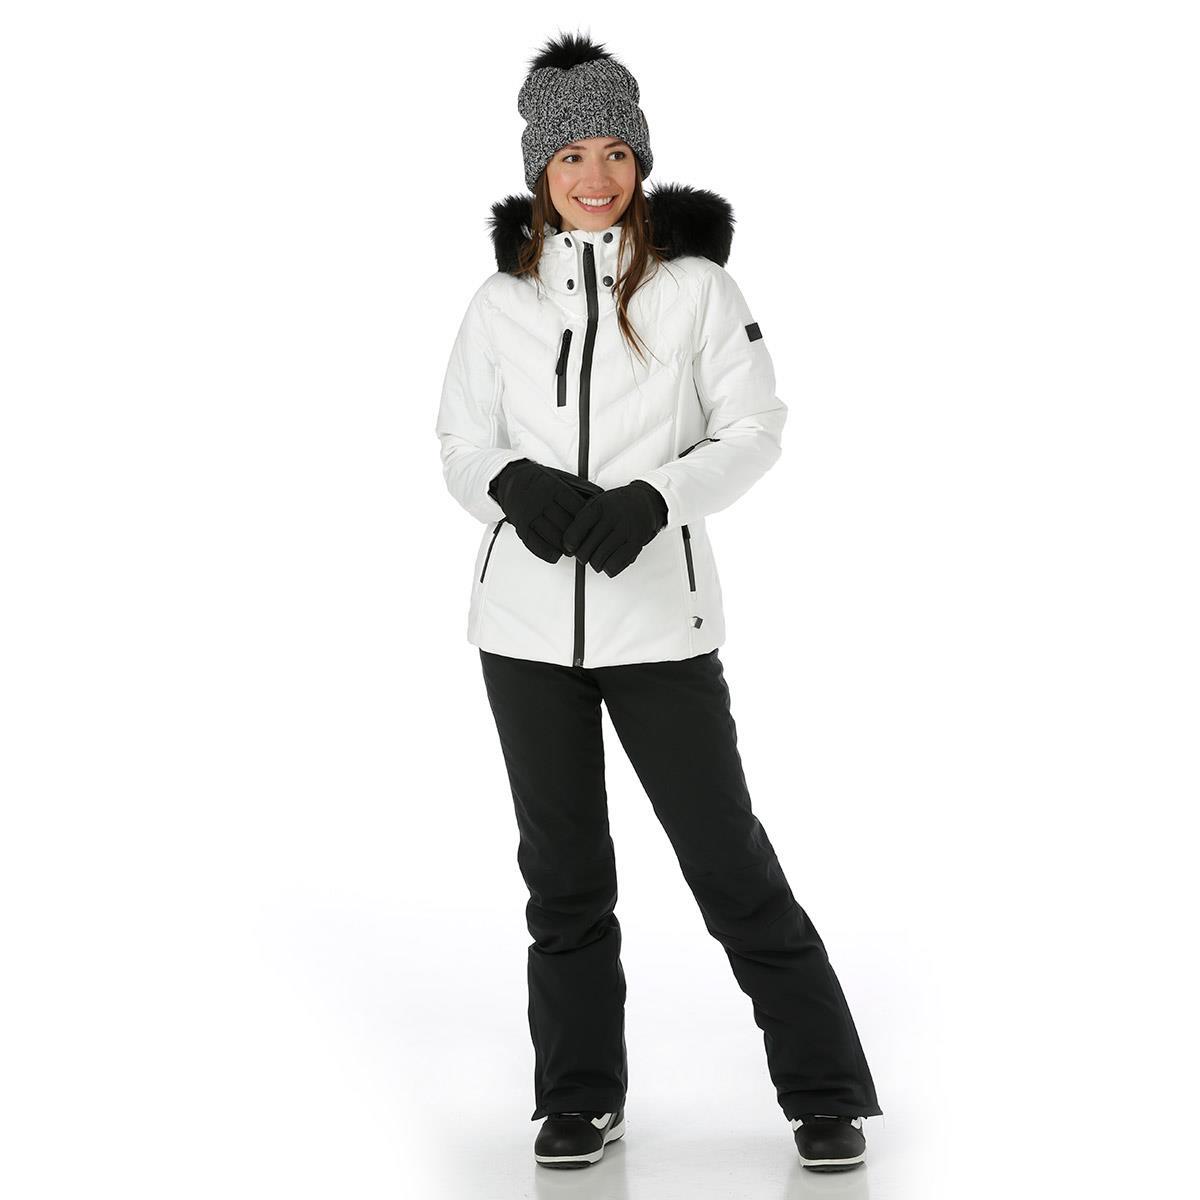 Nils Sundance Insulated Ski Jacket with Faux Fur (Women's)